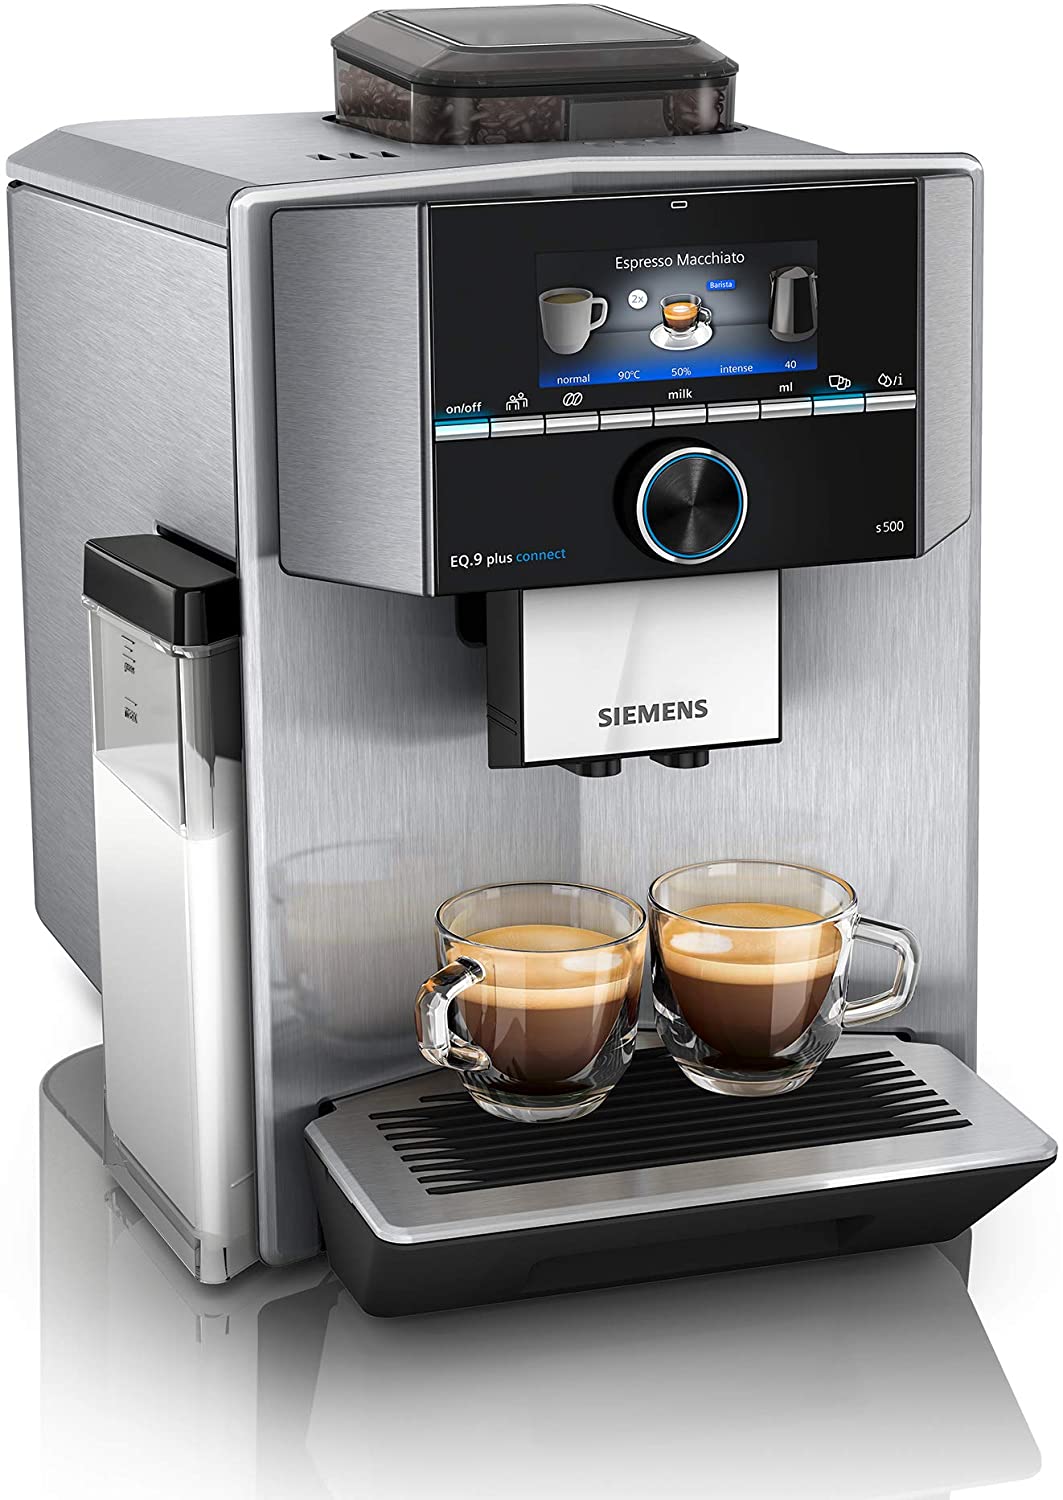 Siemens EQ.9 plus connect s500 fully automatic coffee machine TI9558X1DE, a